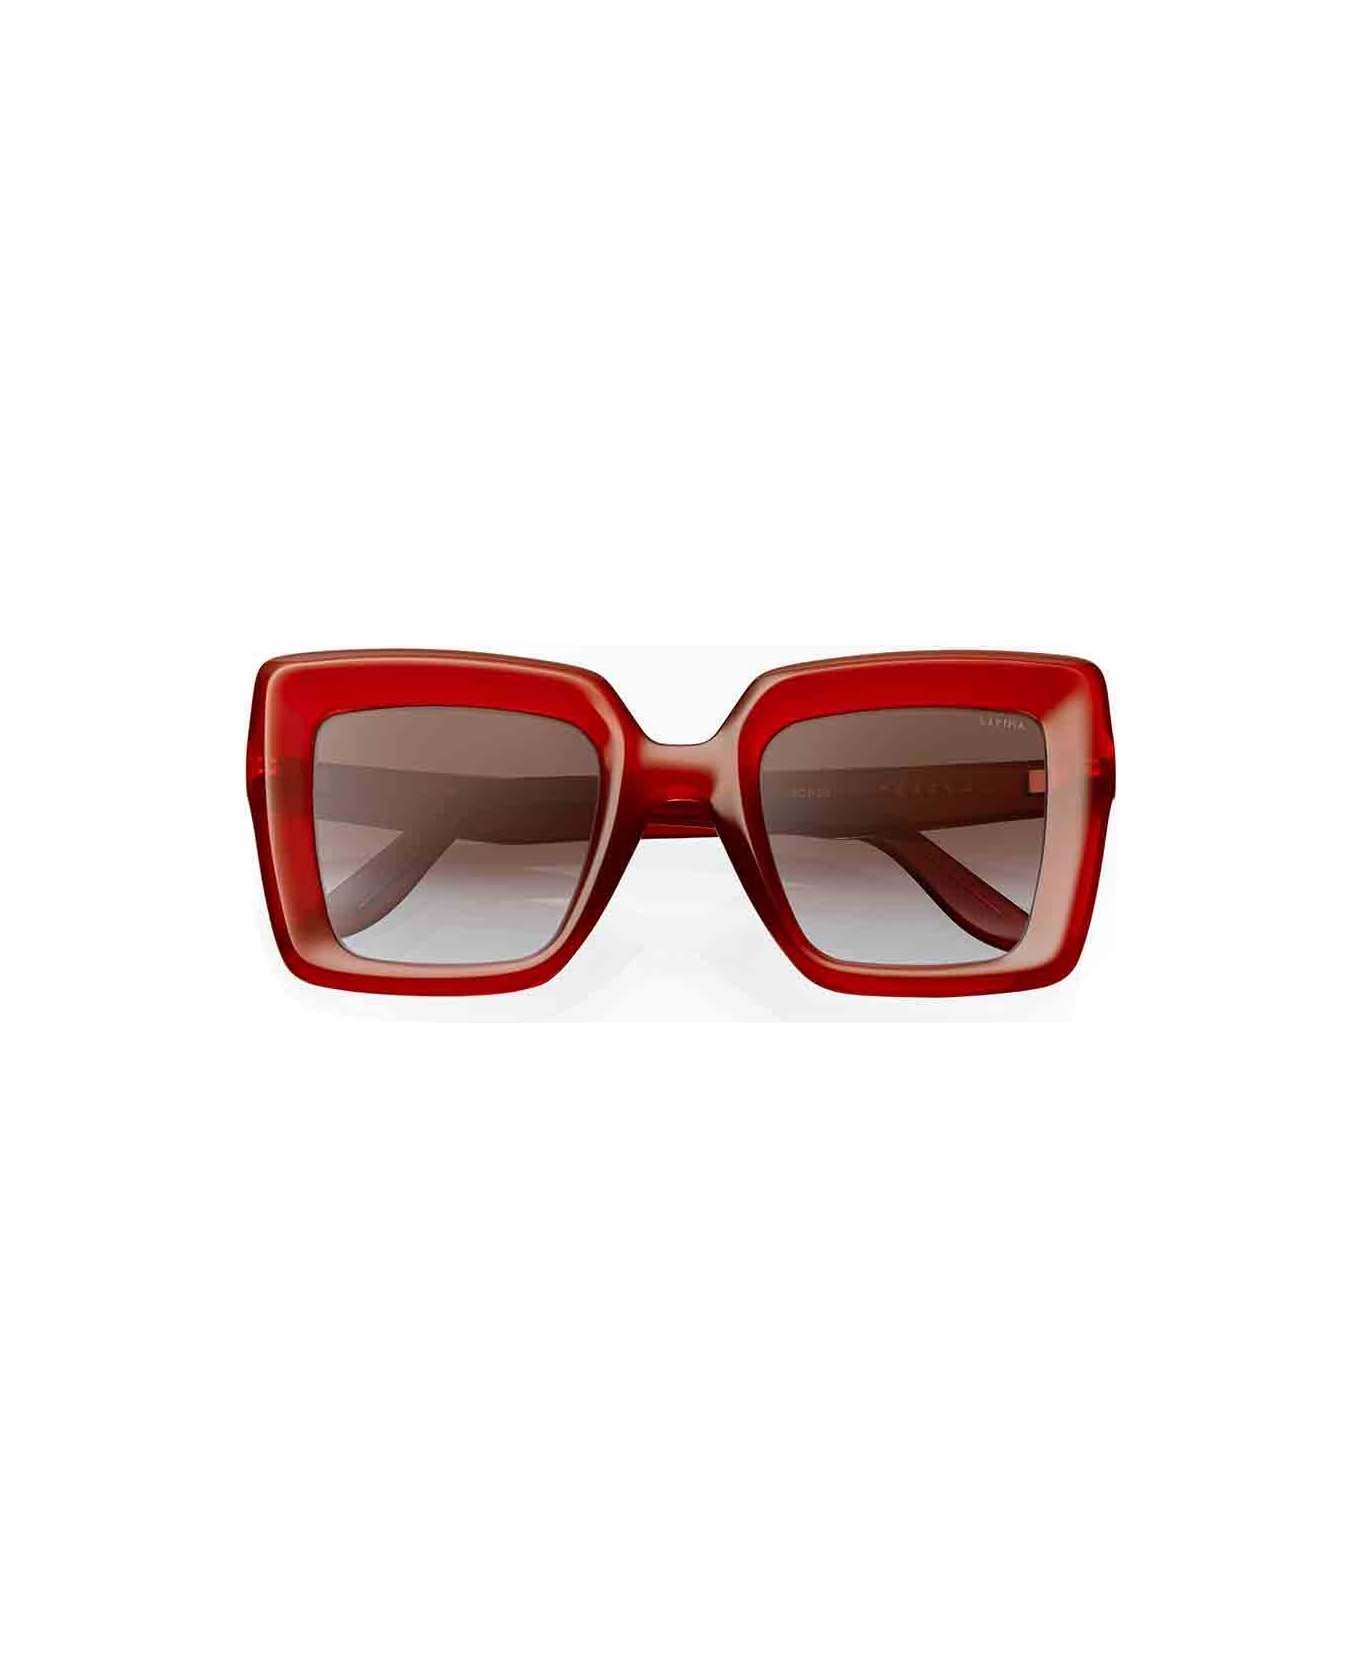 Lapima Eyewear - Rosso/Marrone